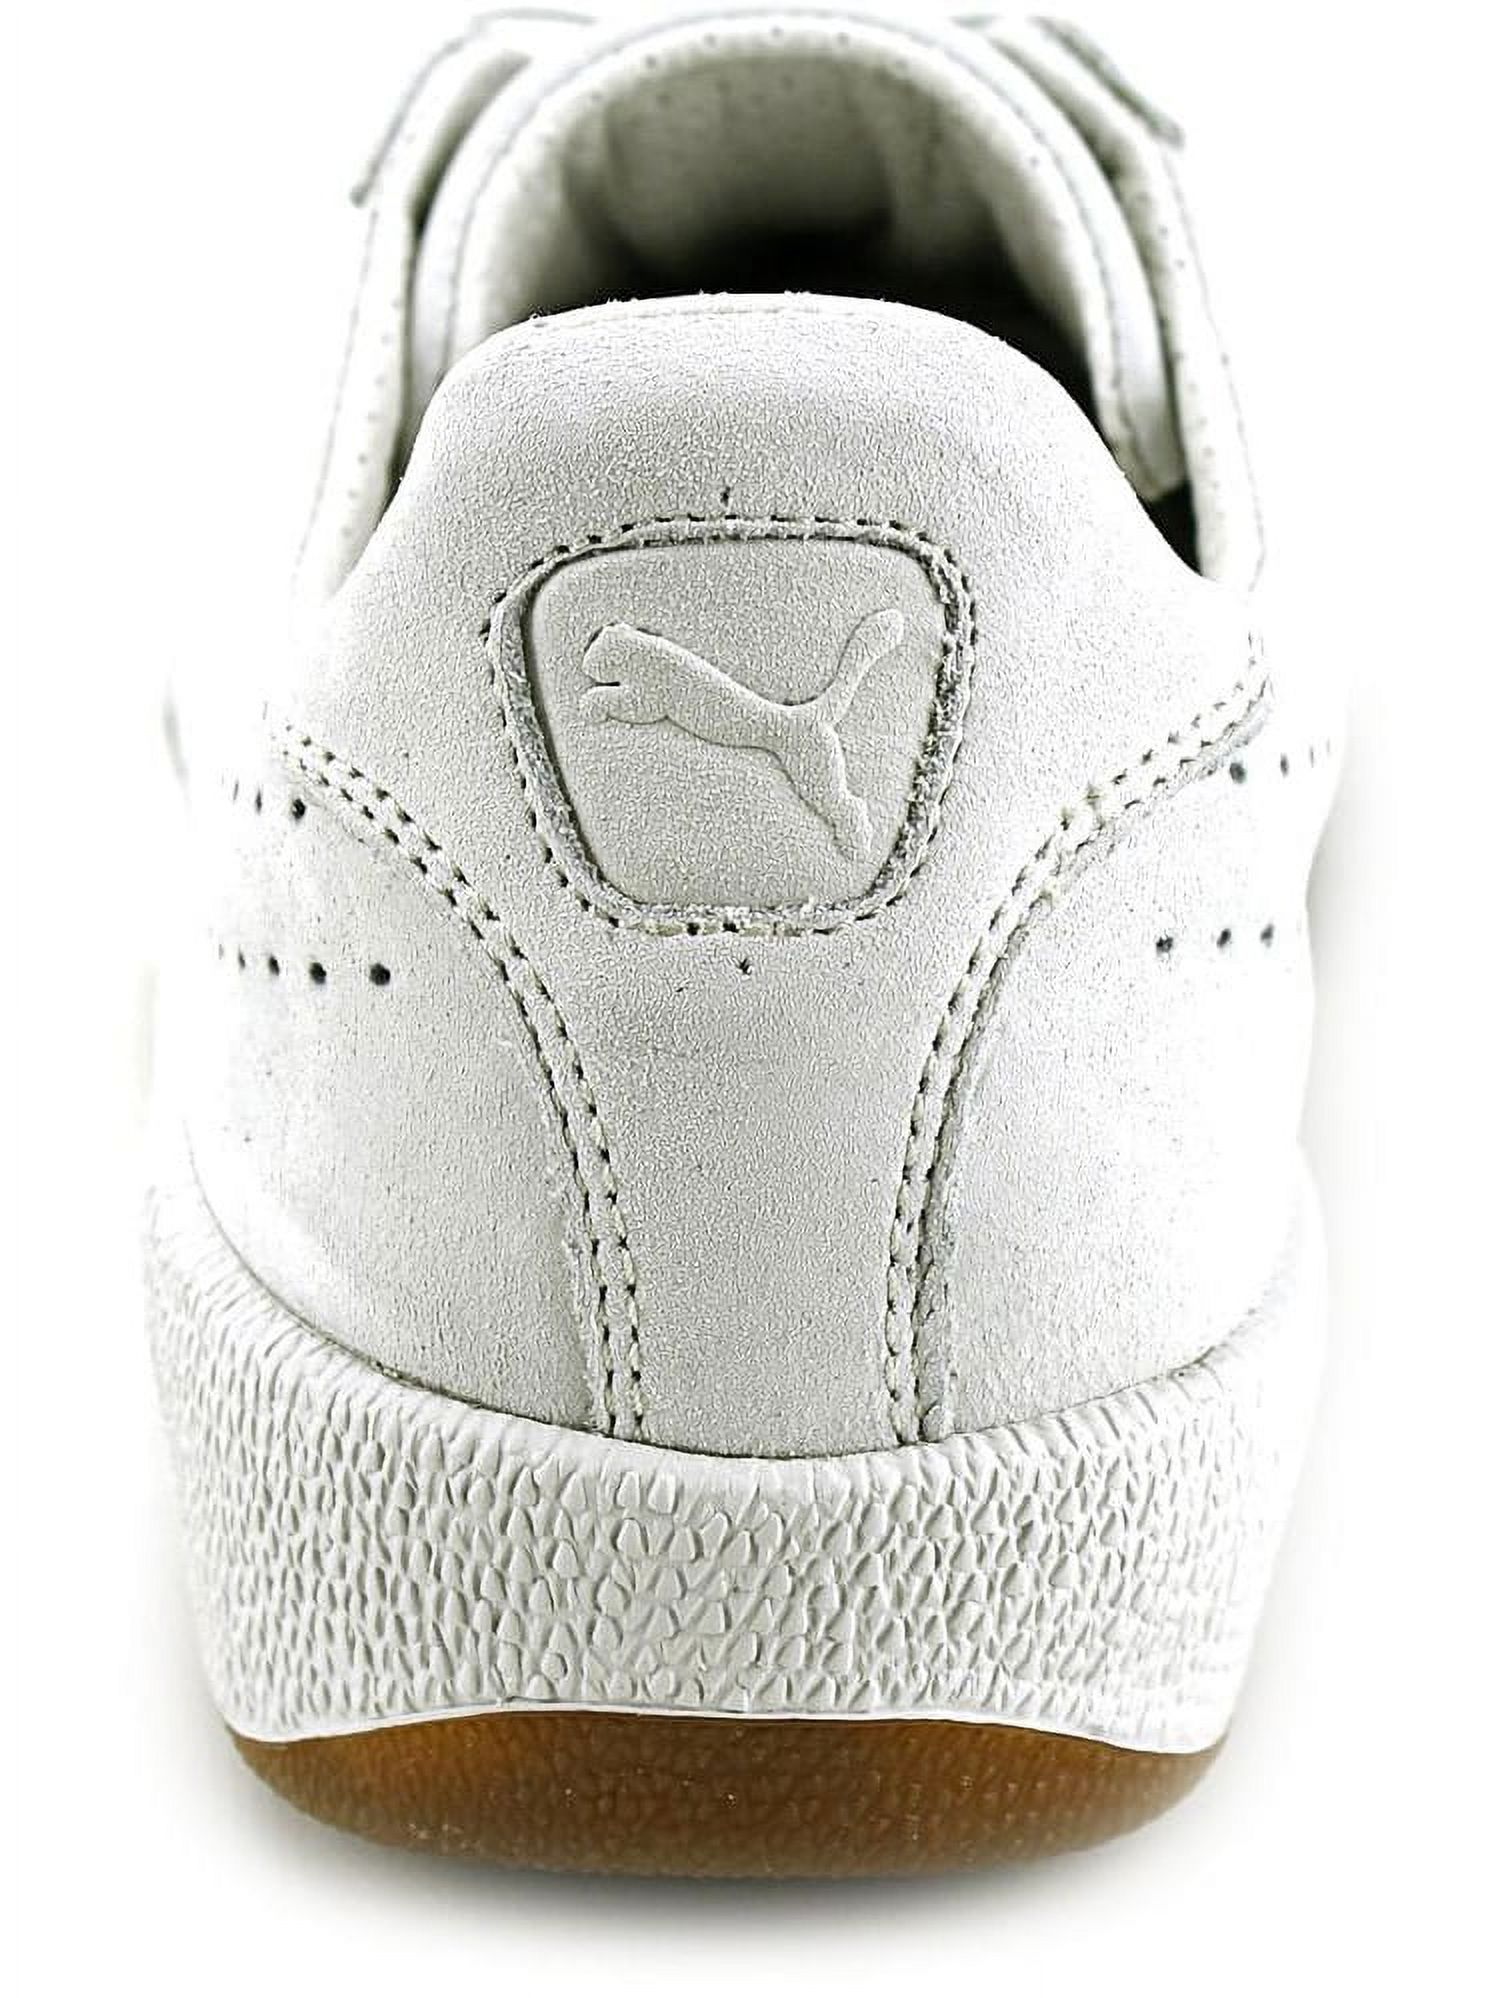 puma puma star mii men  round toe suede white sneakers - image 2 of 5